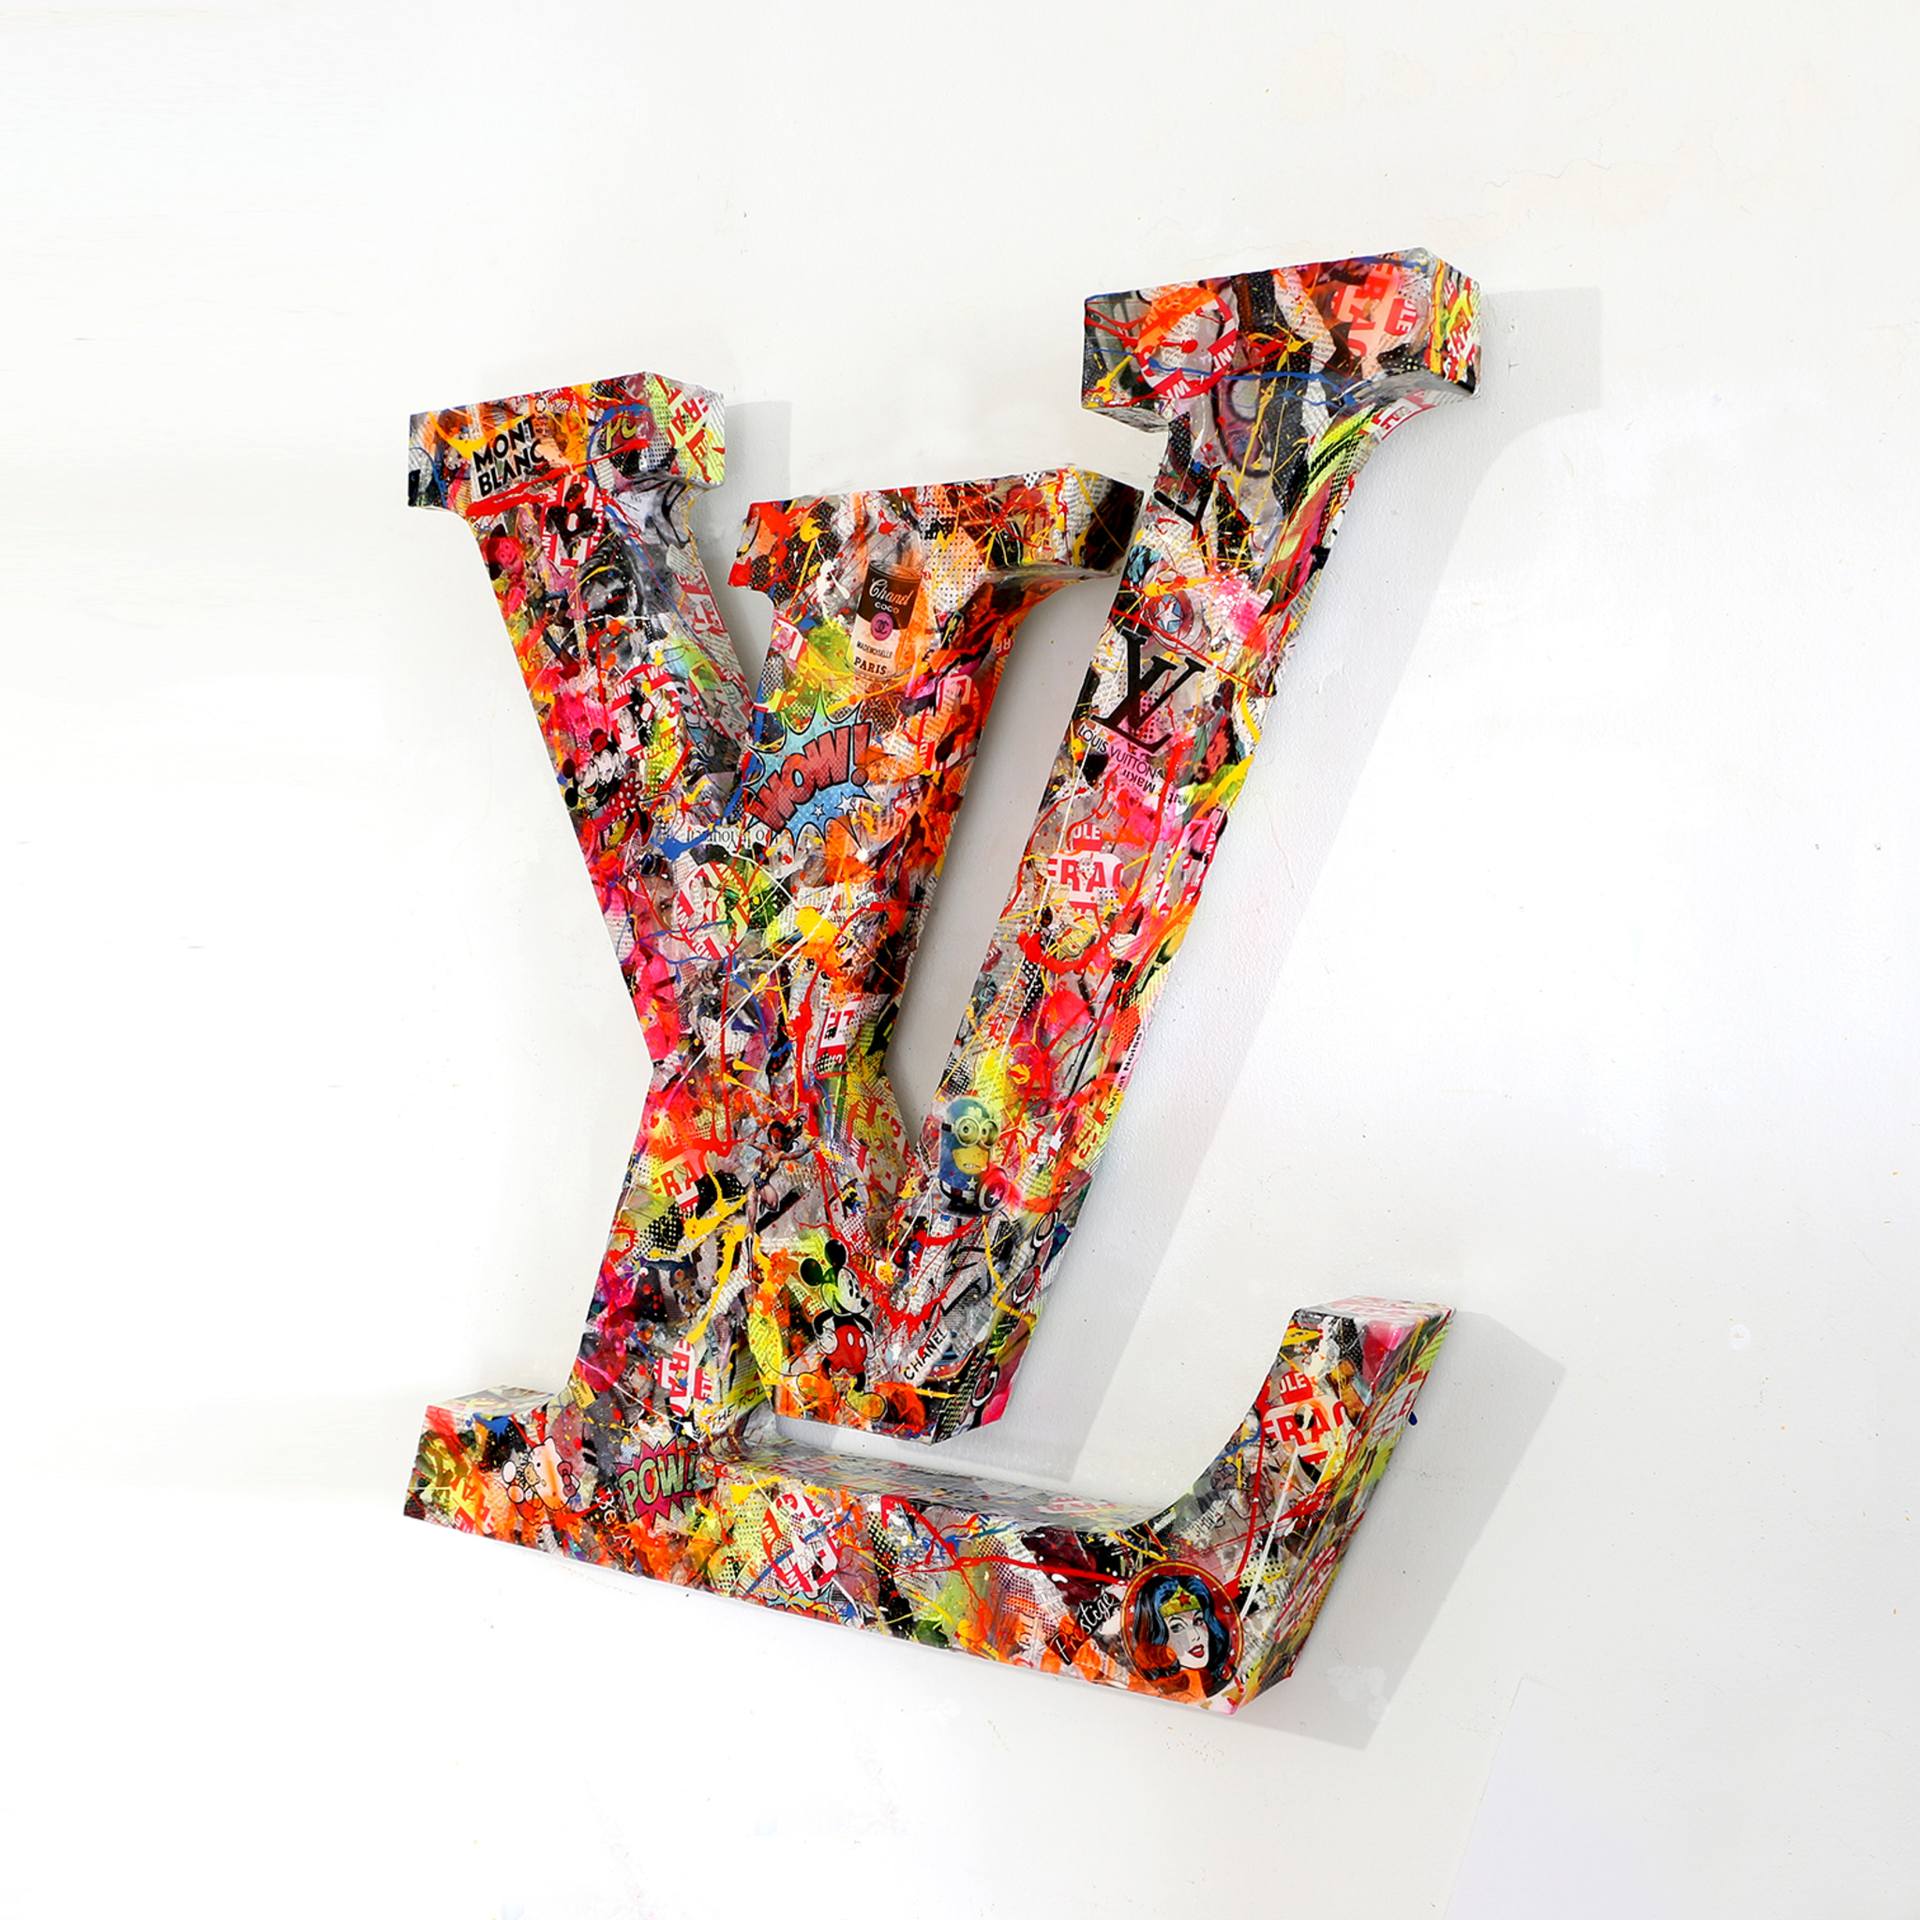 Louis Vuitton logo sculpture takes shape for the new Miami boutique -  Luxurylaunches